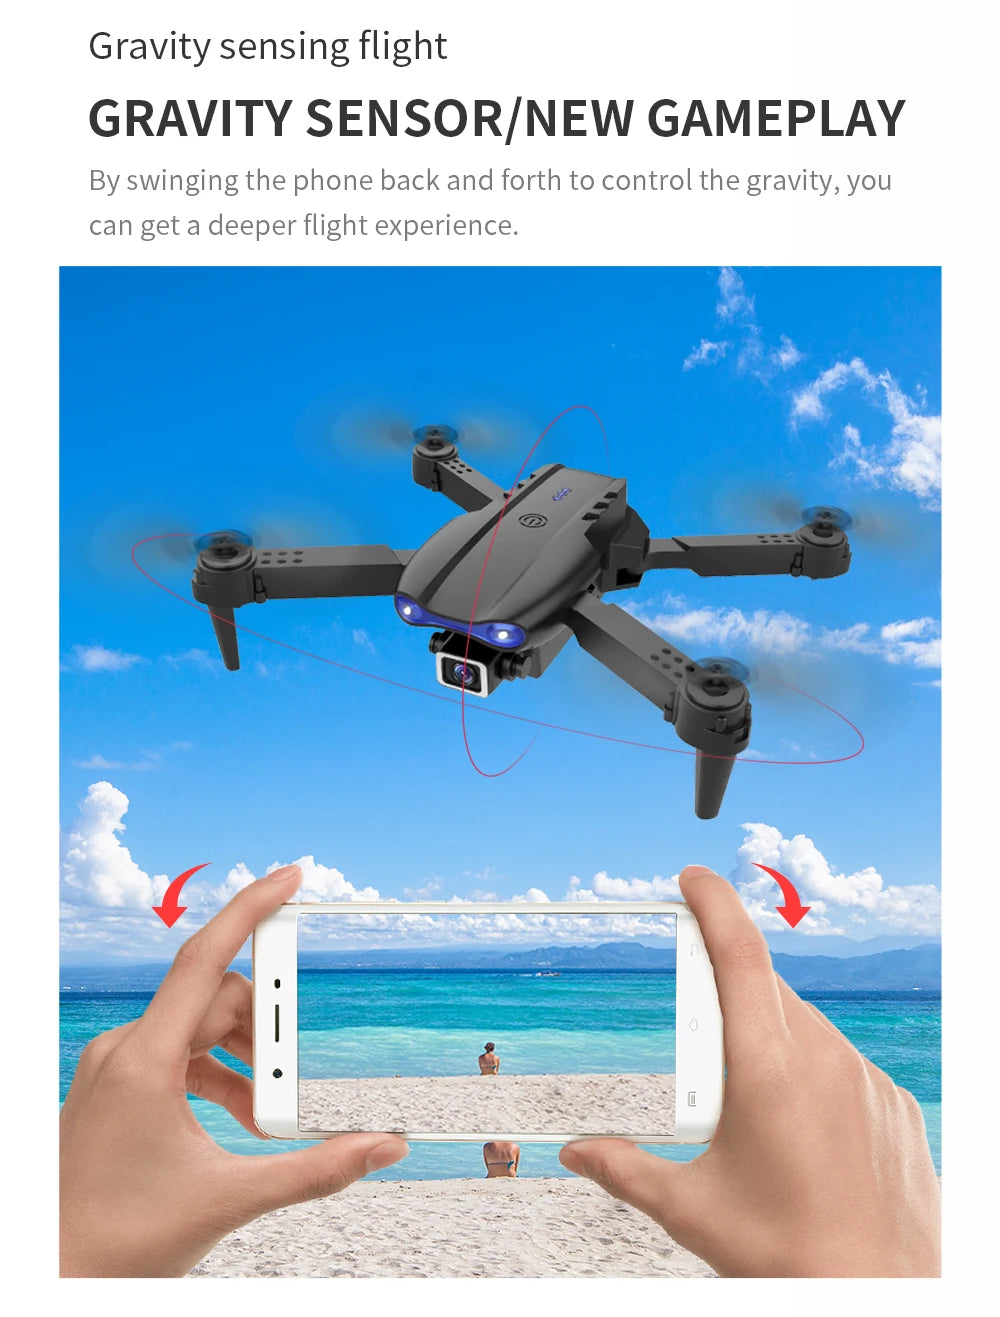 XYRC K3 Mini Drone, gravity sensing flight gravity sensorinew gameplay by swinging the phone